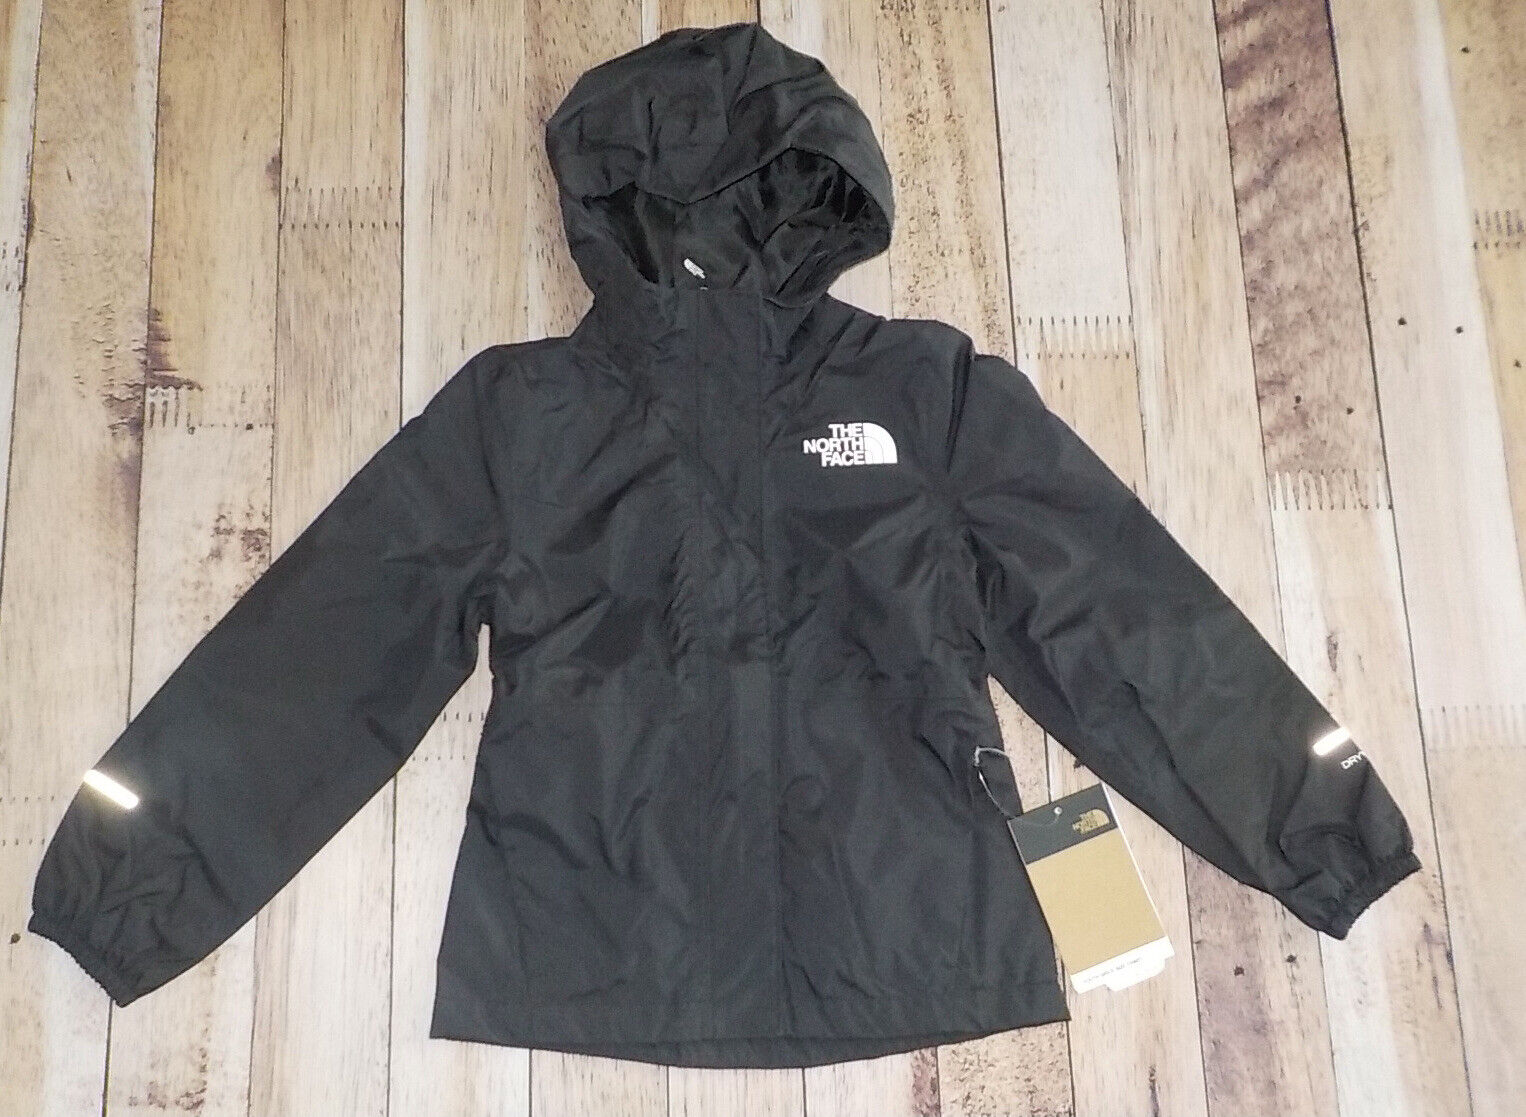 The North Face Girls Black DryVent Jacket Waterproof Rain Jacket XXS 5 NWT $69